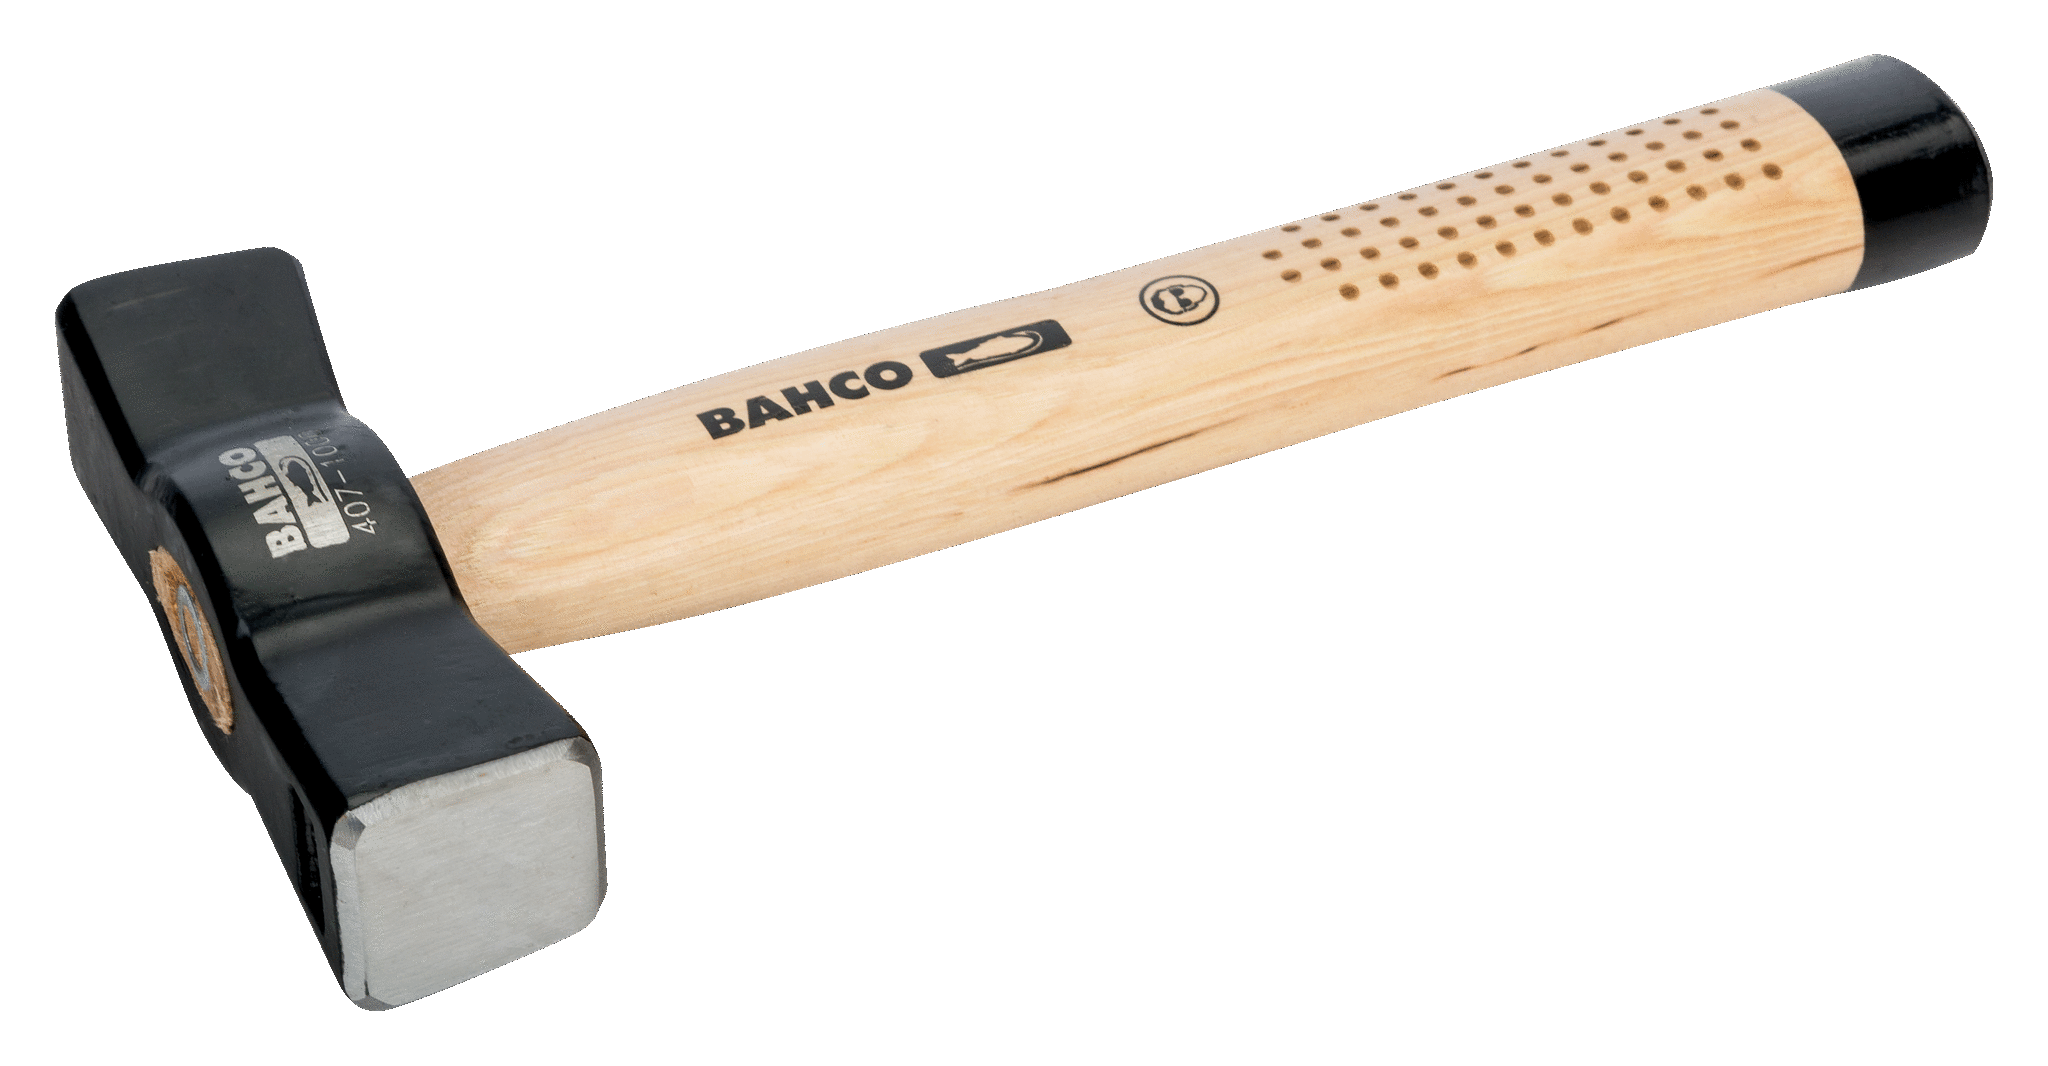 Кувалда с заостренным бойком, деревянная рукоятка BAHCO 407-1400